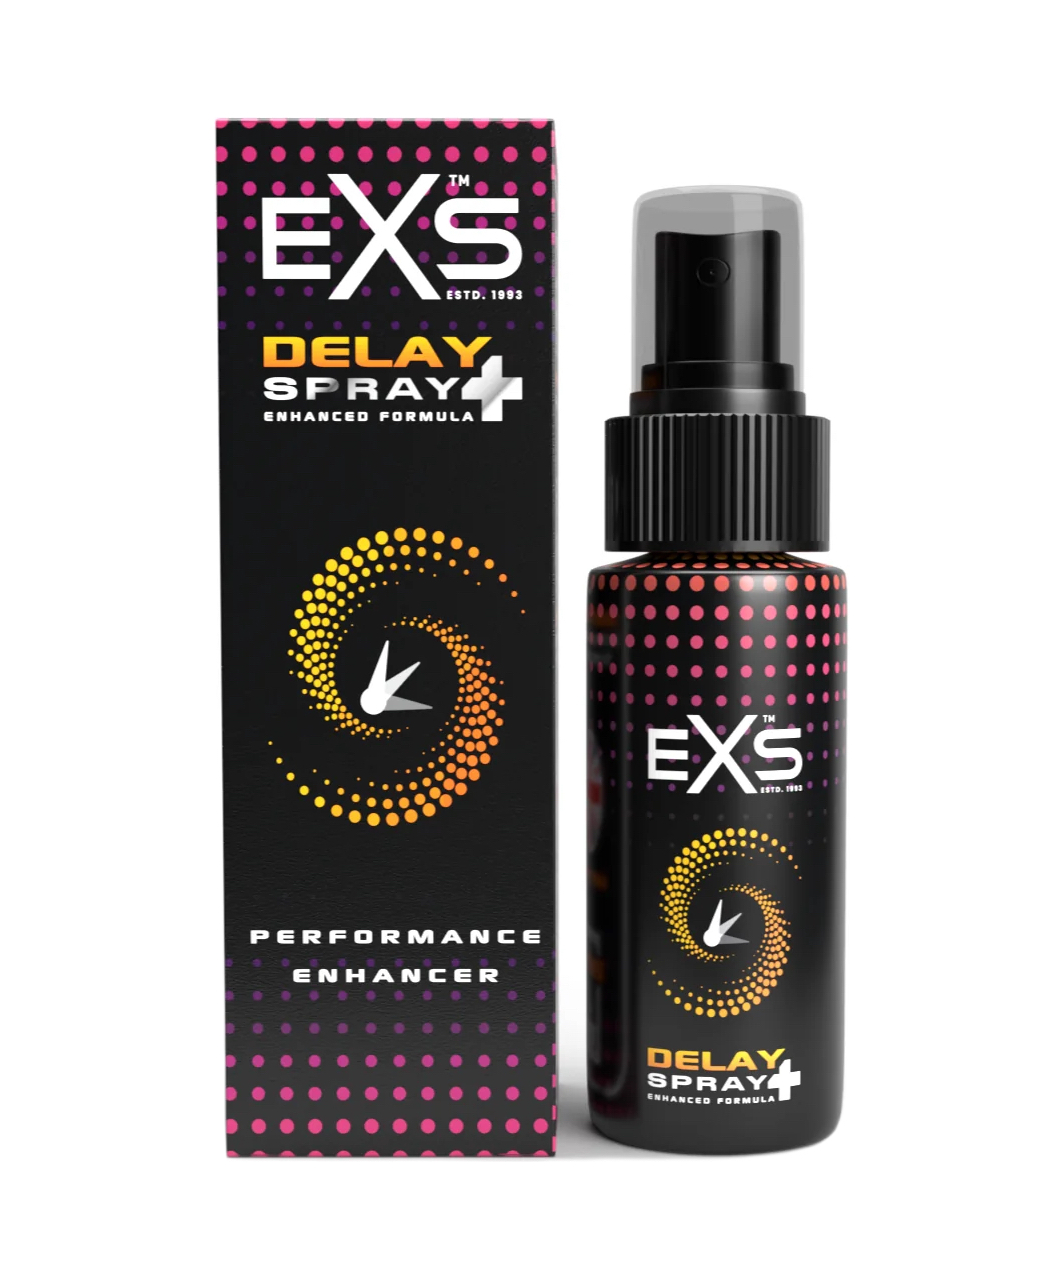 EXS Delay Spray+ Enhanced Formula Performance Enhancer (50 ml)